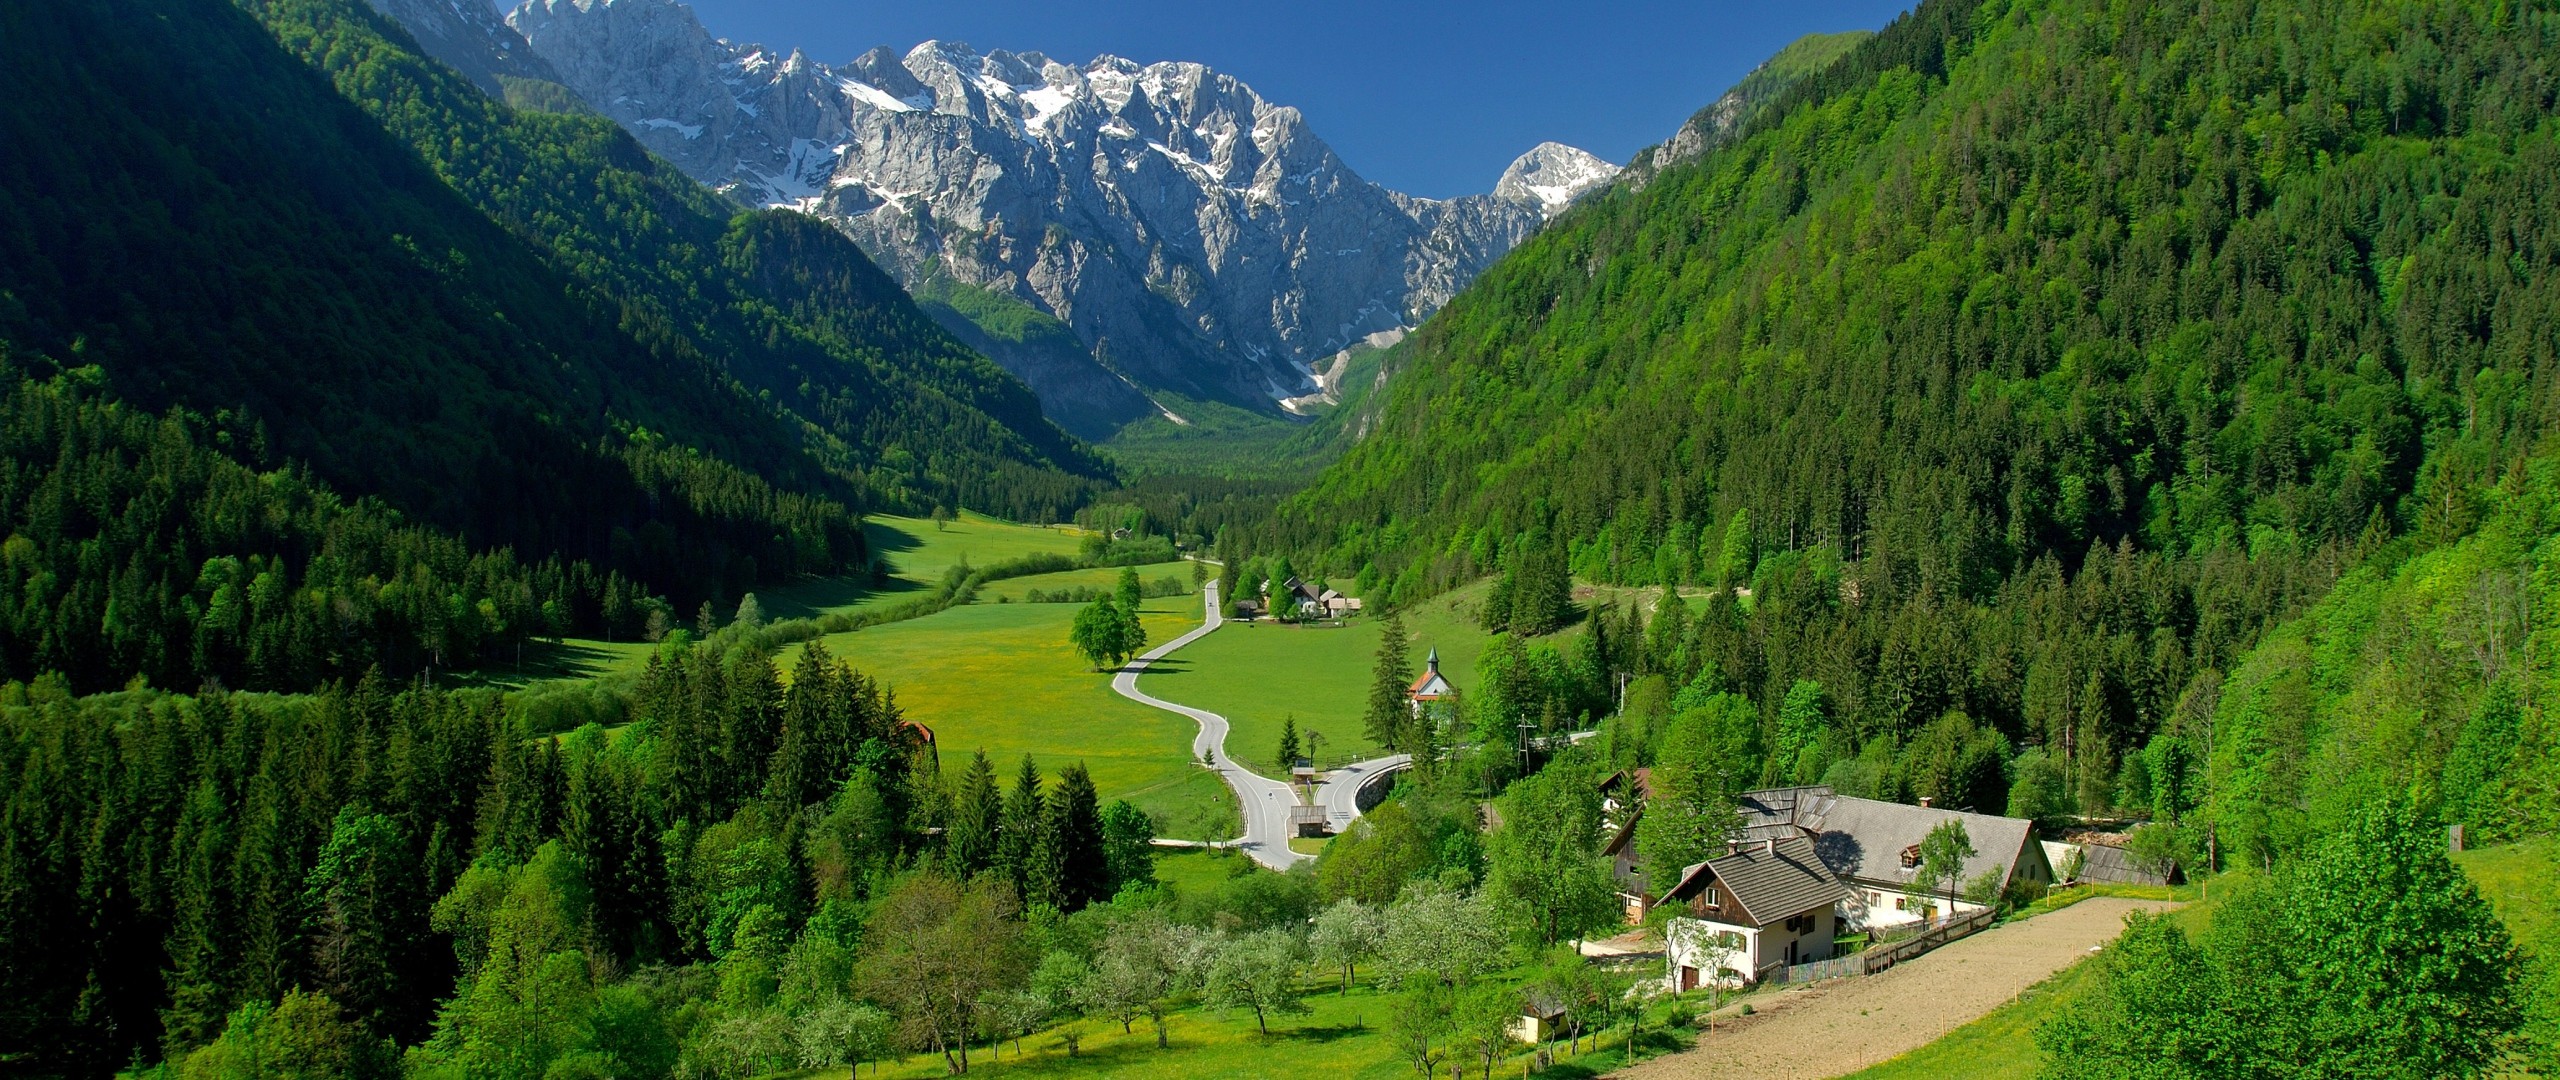 General 2560x1080 landscape valley village Alps mountains nature